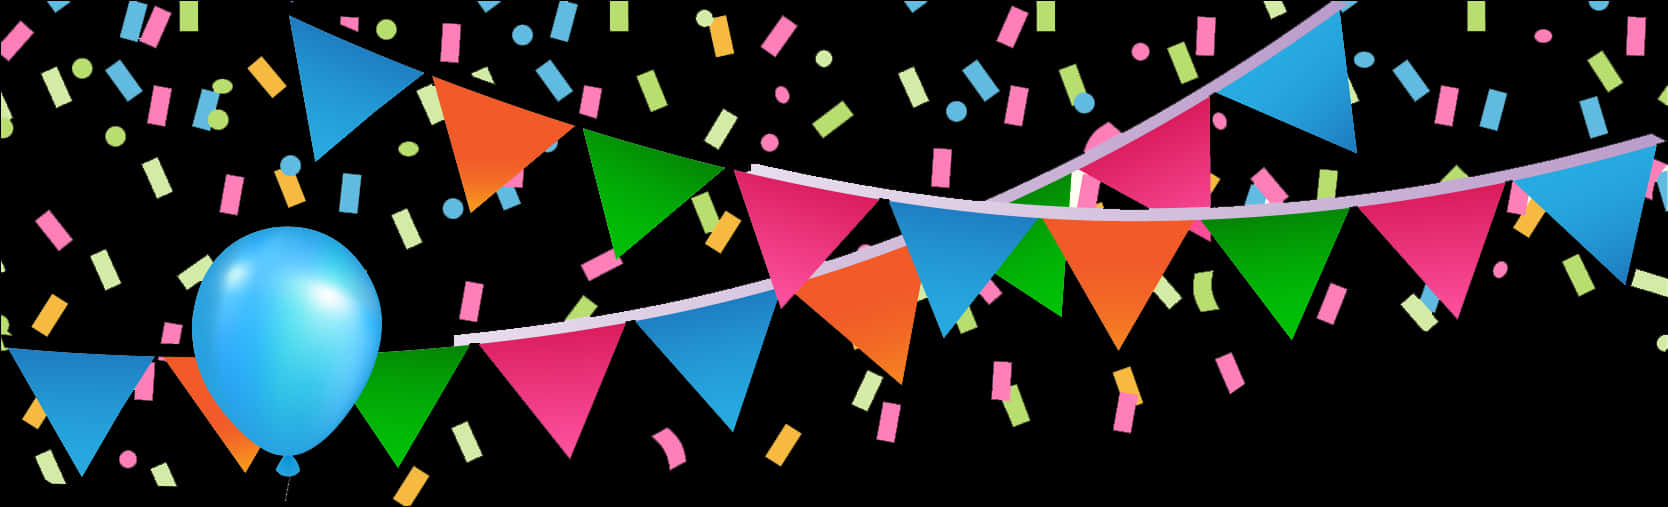 Festive Birthday Bannerand Confetti PNG image